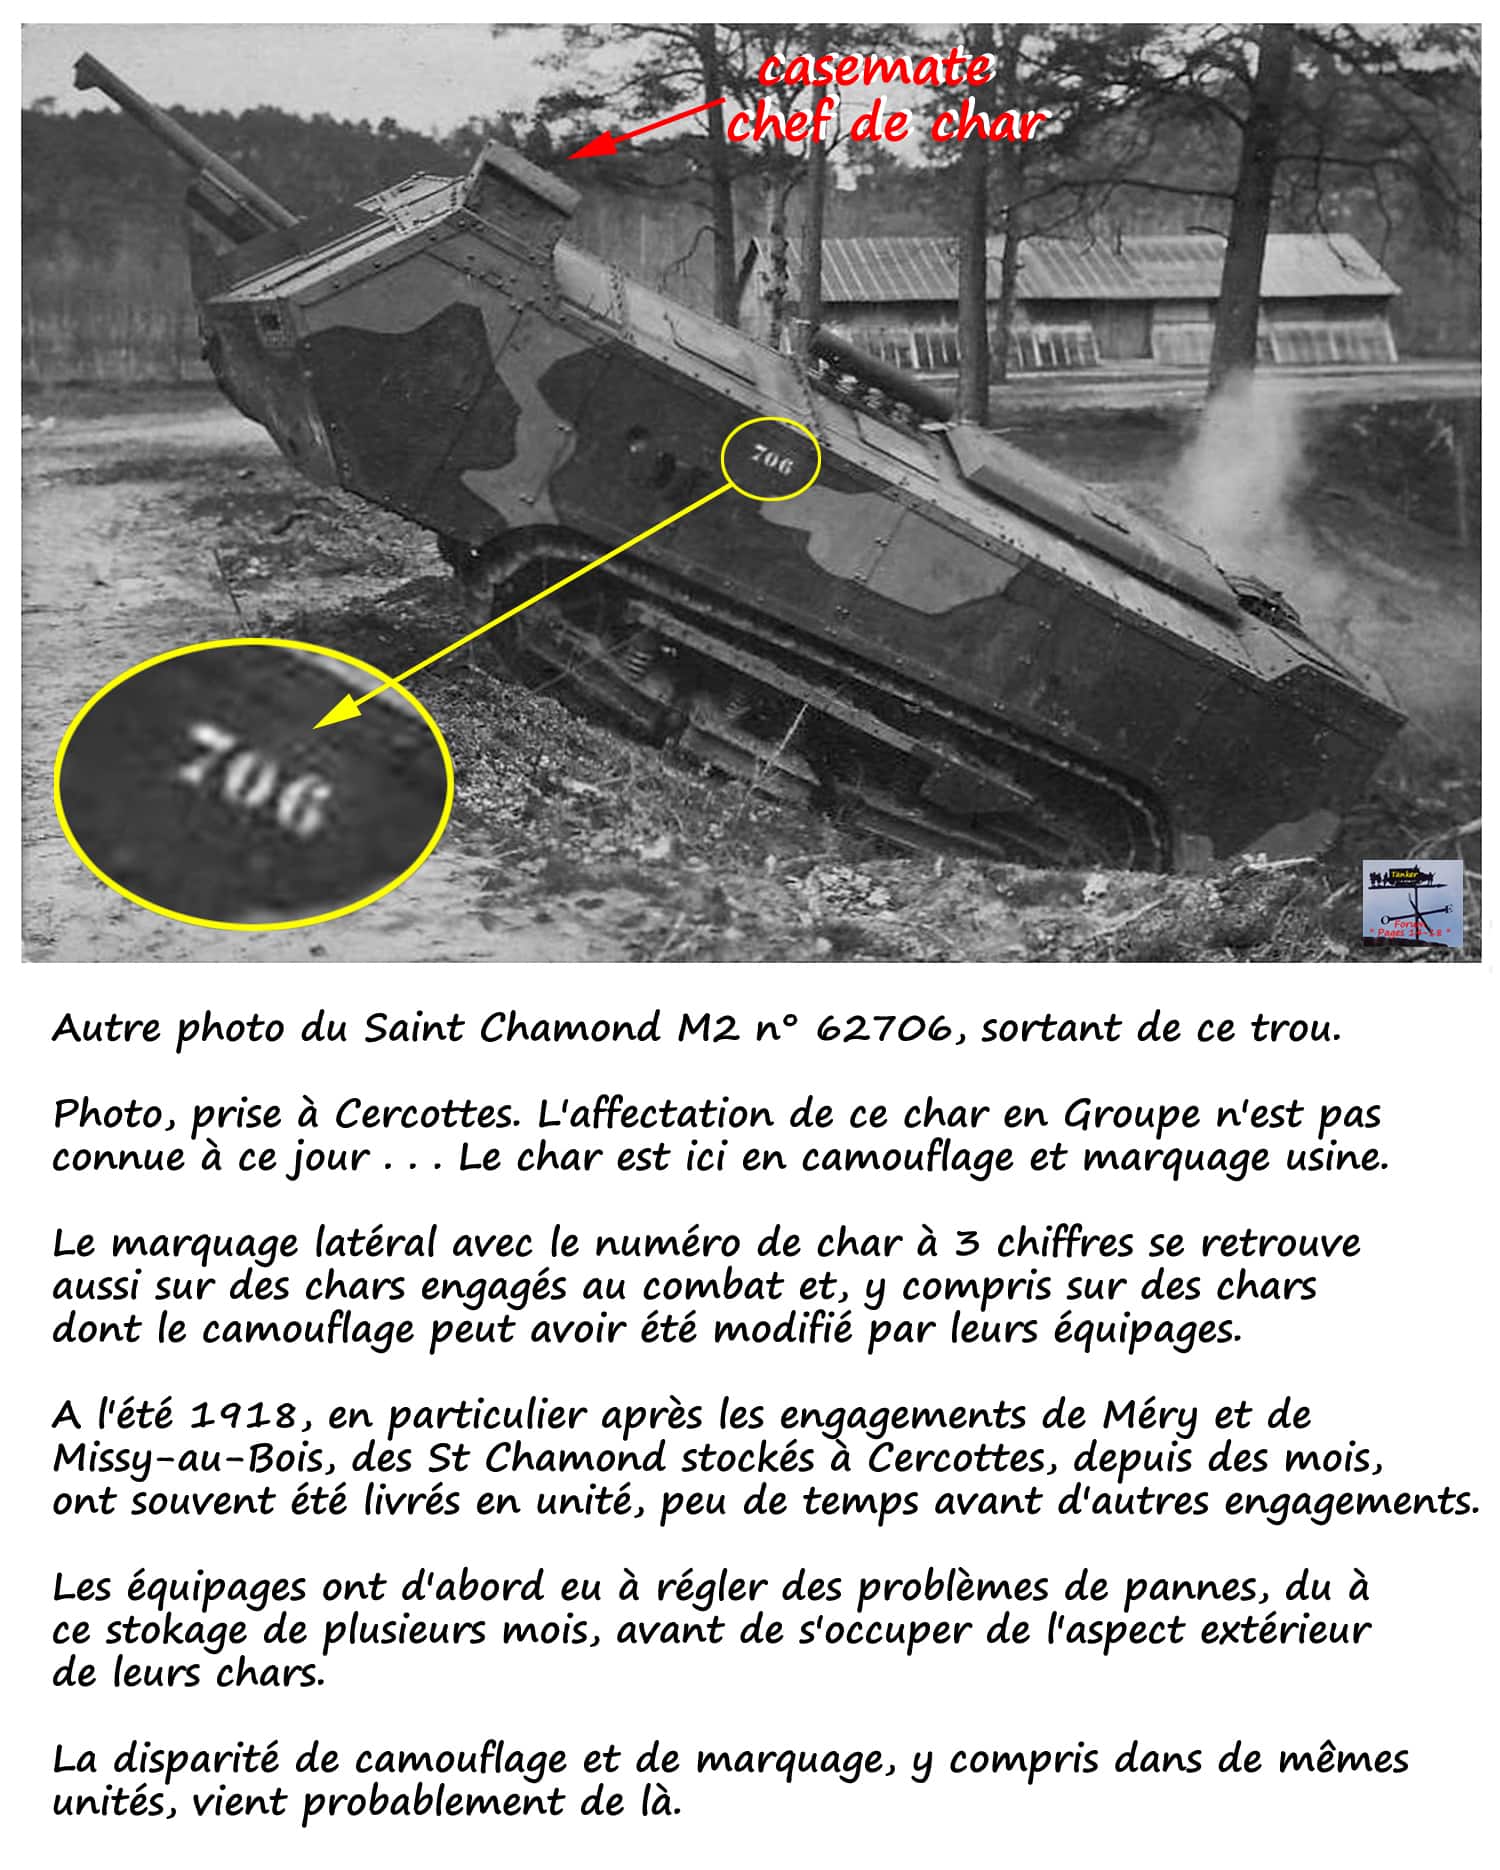 St Chamond M2 n° 62706 (03a)-min.jpg